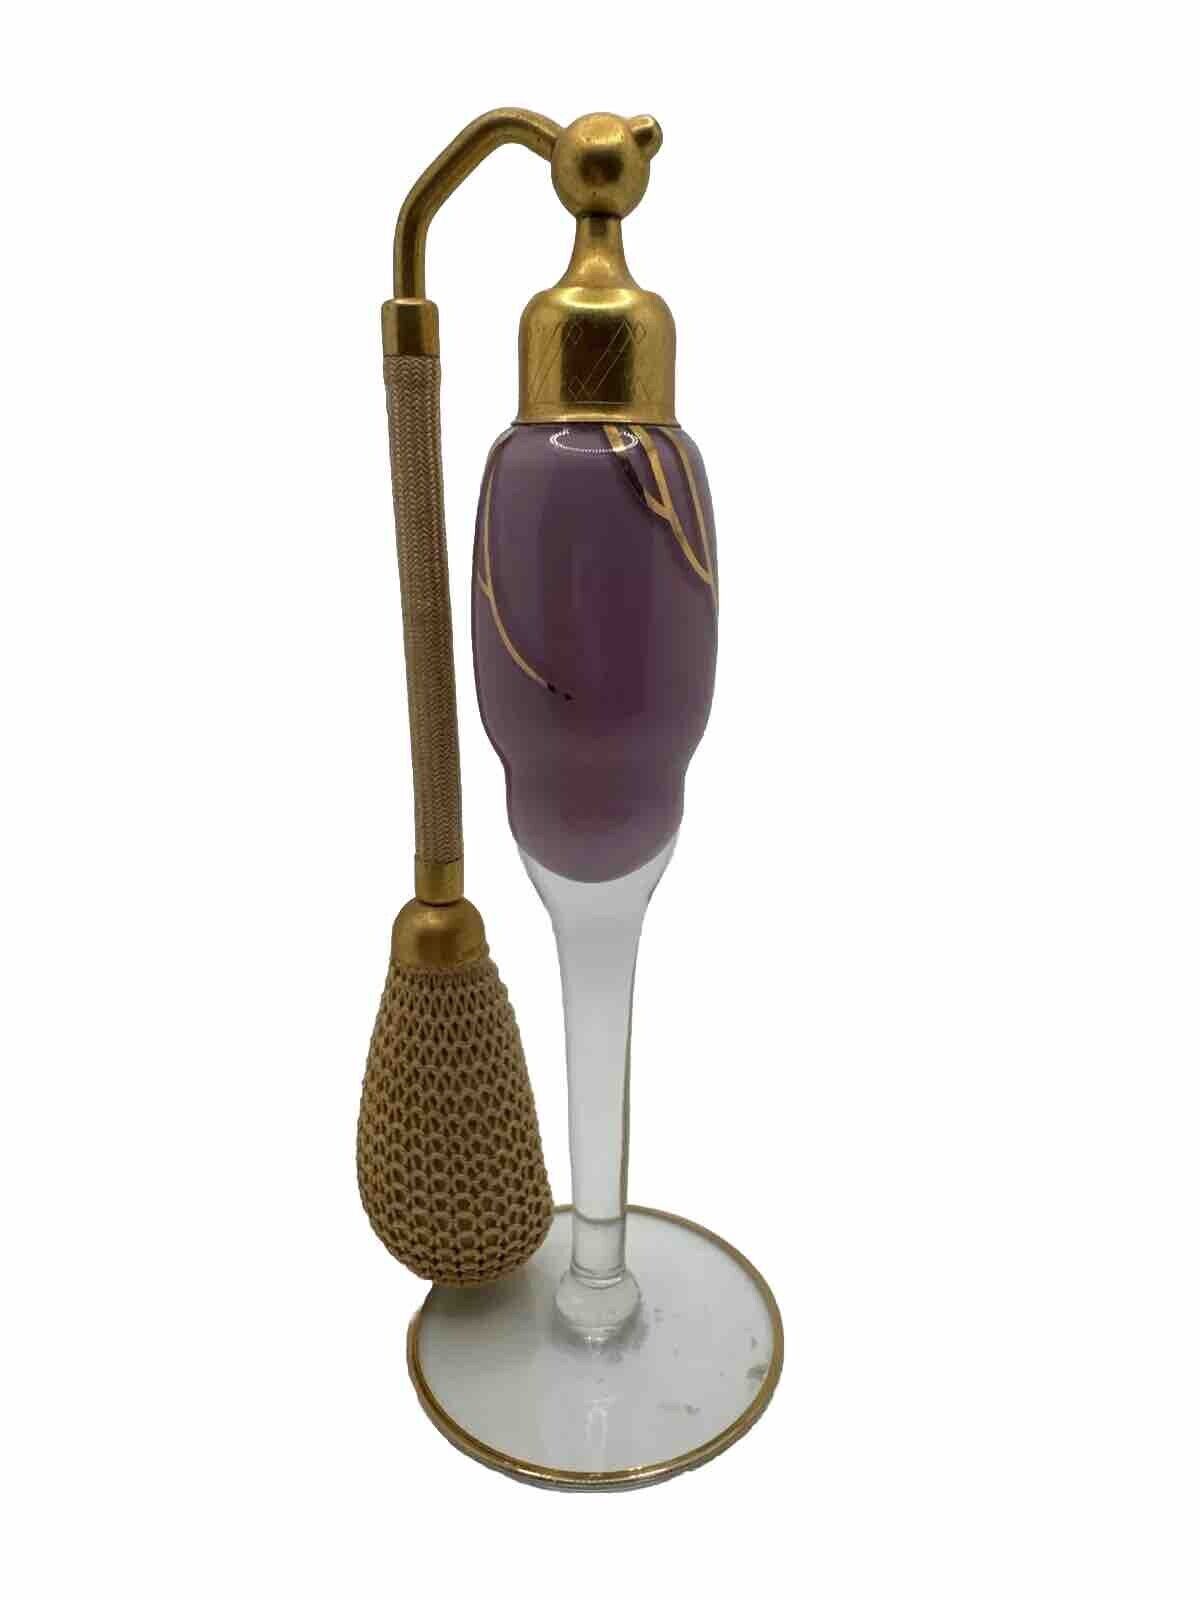 Rare DeVilbiss Pink & Gold Perfume Atomizer c1930 Original Bulb Stunning Piece